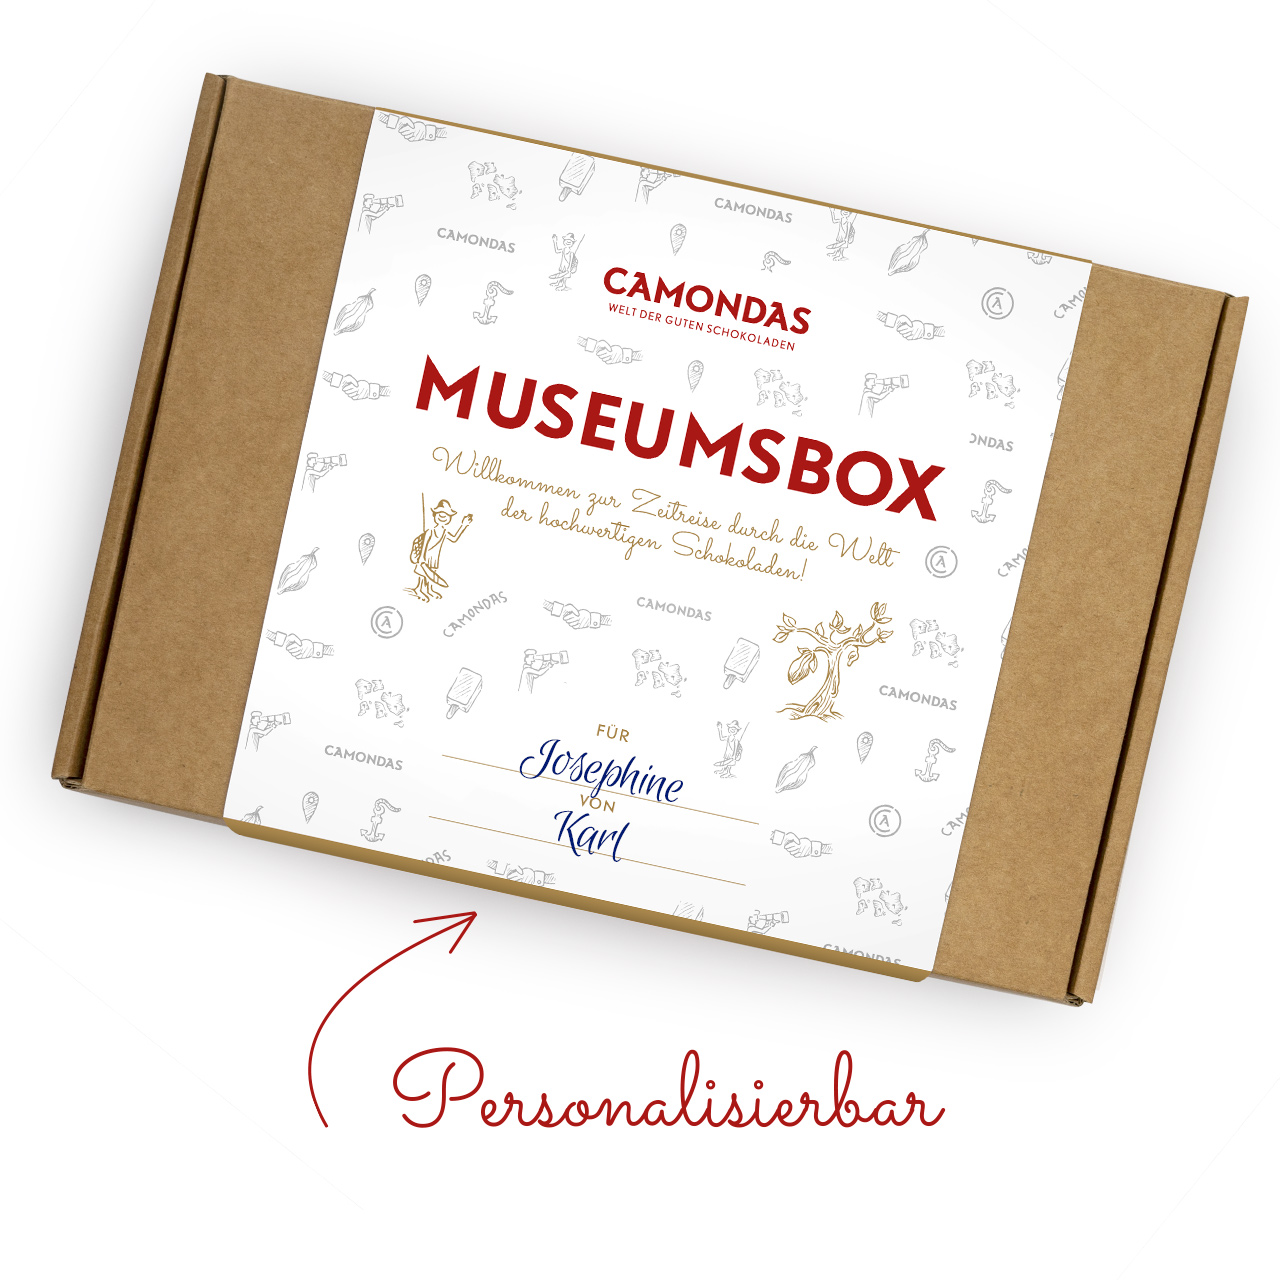 CAMONDAS_Museumsbox_smal_personalisiert_webuFf2HDL7Z1XKn